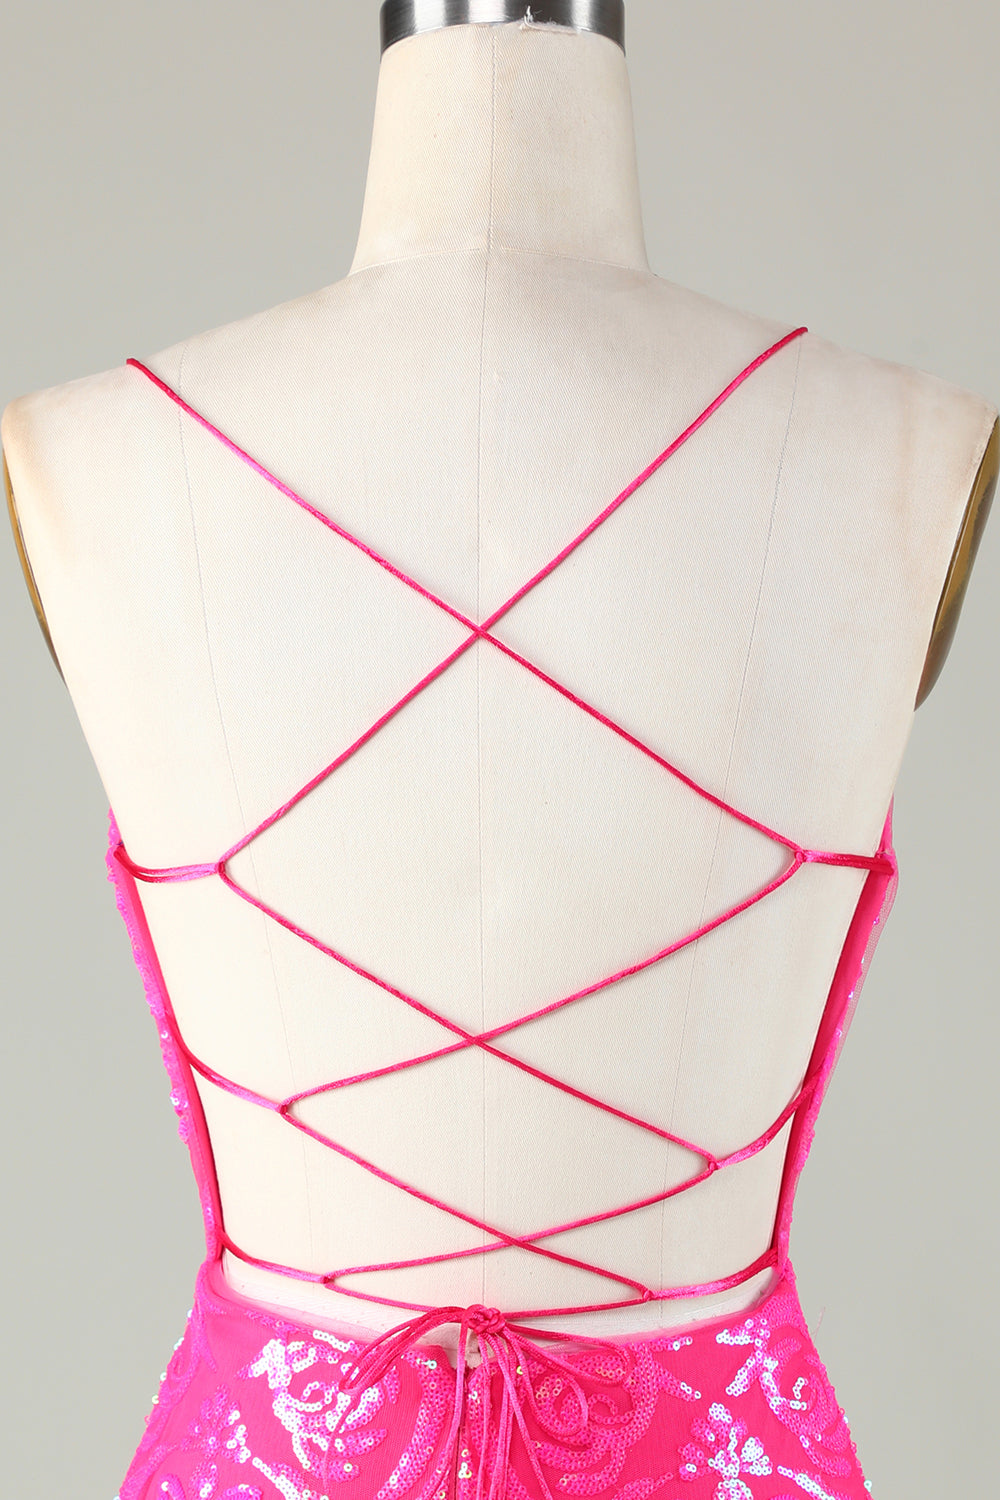 ZAPAKA Women Trend Hot Pink Lace Up Tight Glitter Homecoming Dress